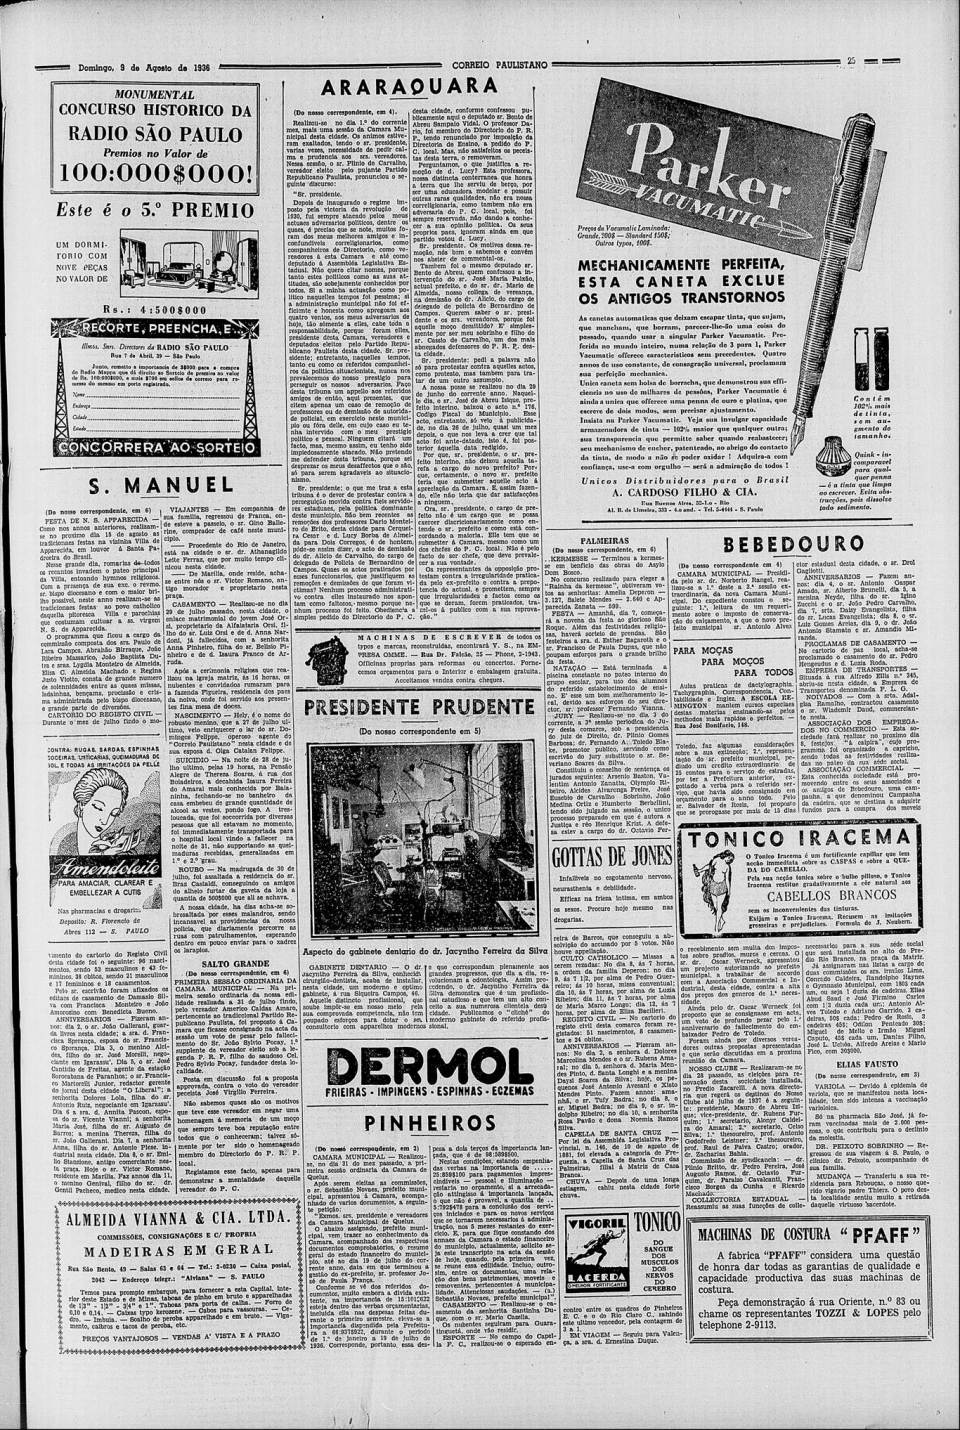 art-bebedouro-nota-aniversario-luiz-gomes-areias-correio-paulistano-9-august-1936-folha